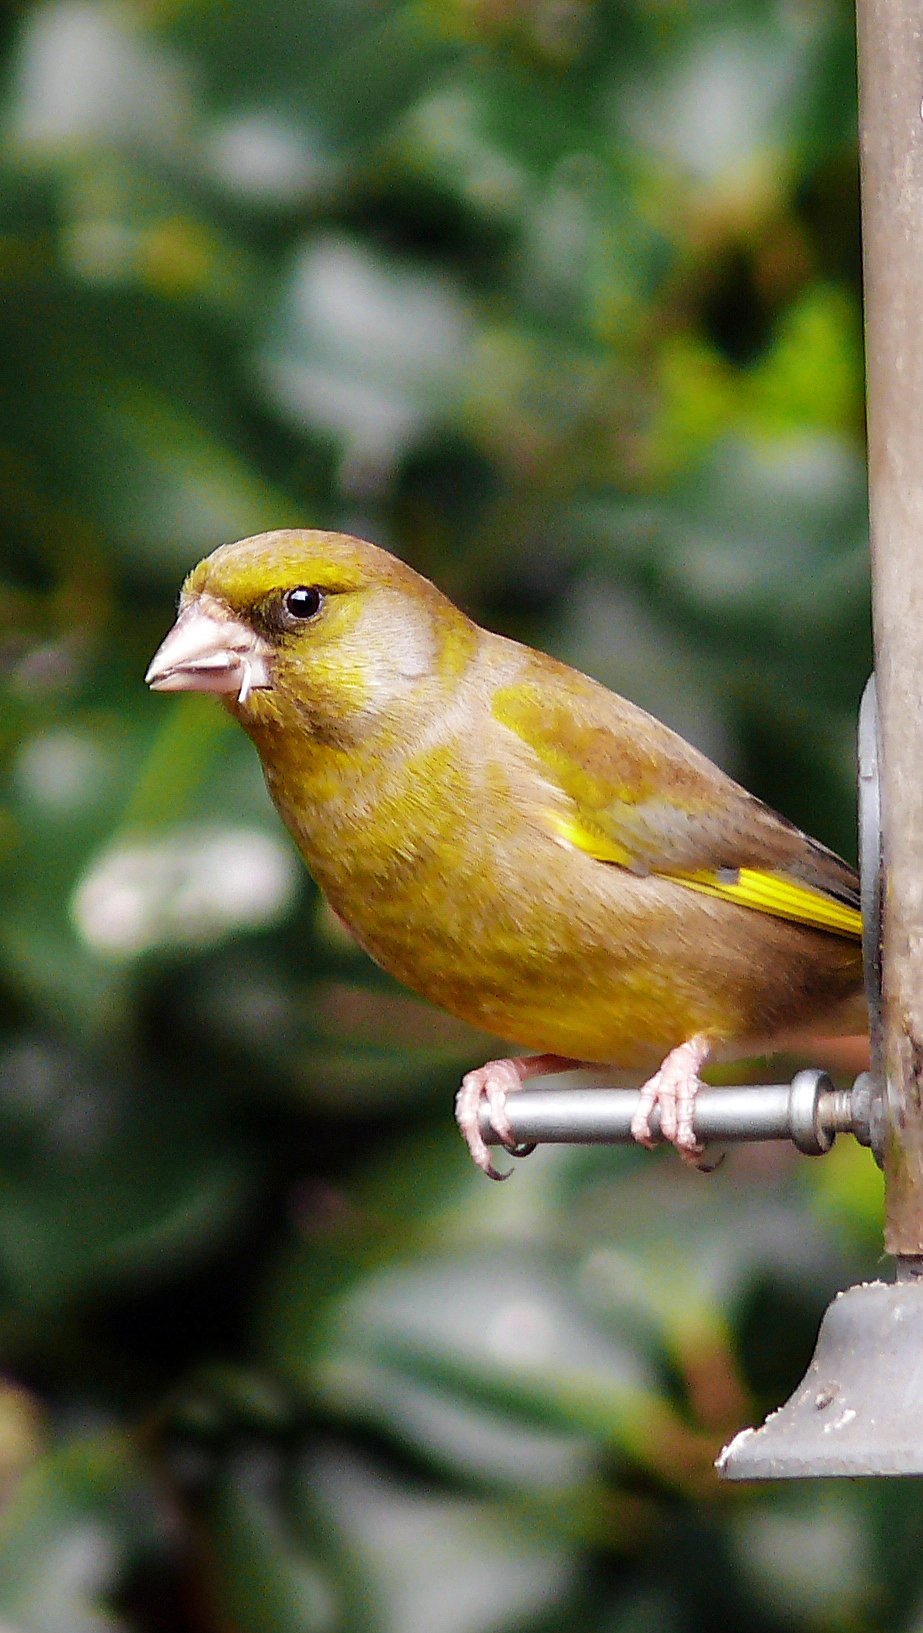 a yellow bird sitting on a feeder outside